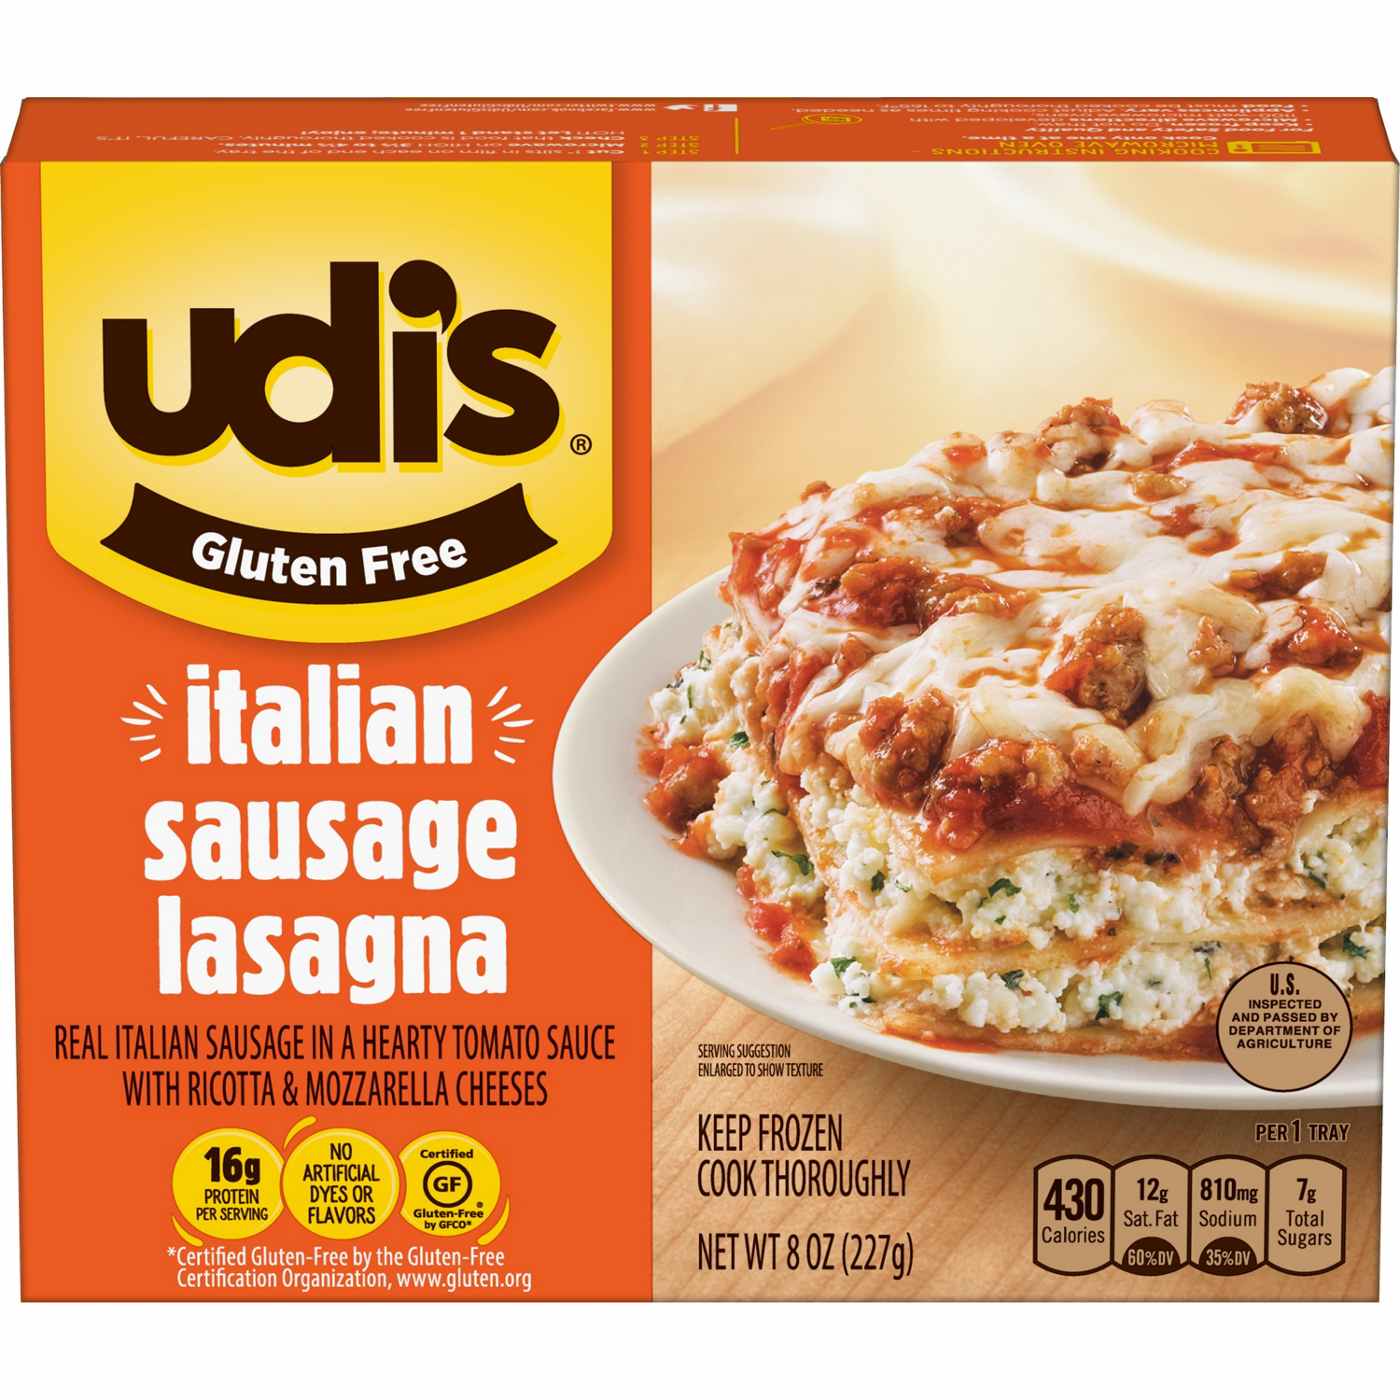 Udi's Gluten-Free Italian Sausage Lasagna Frozen Meal; image 1 of 7